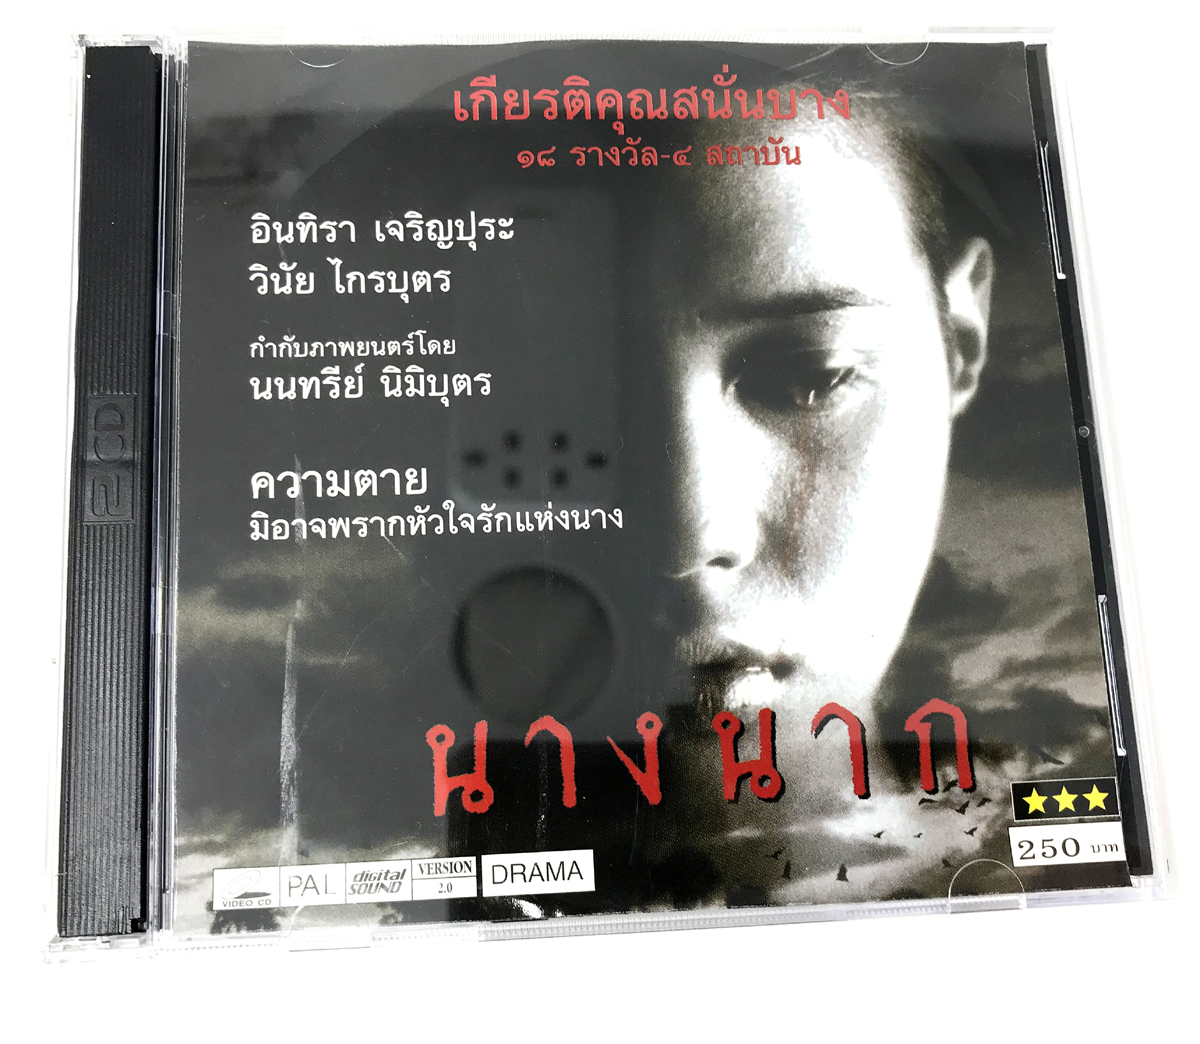  Thai language Thai movie [na-nna-k]VIDEO CD 2 sheets set 